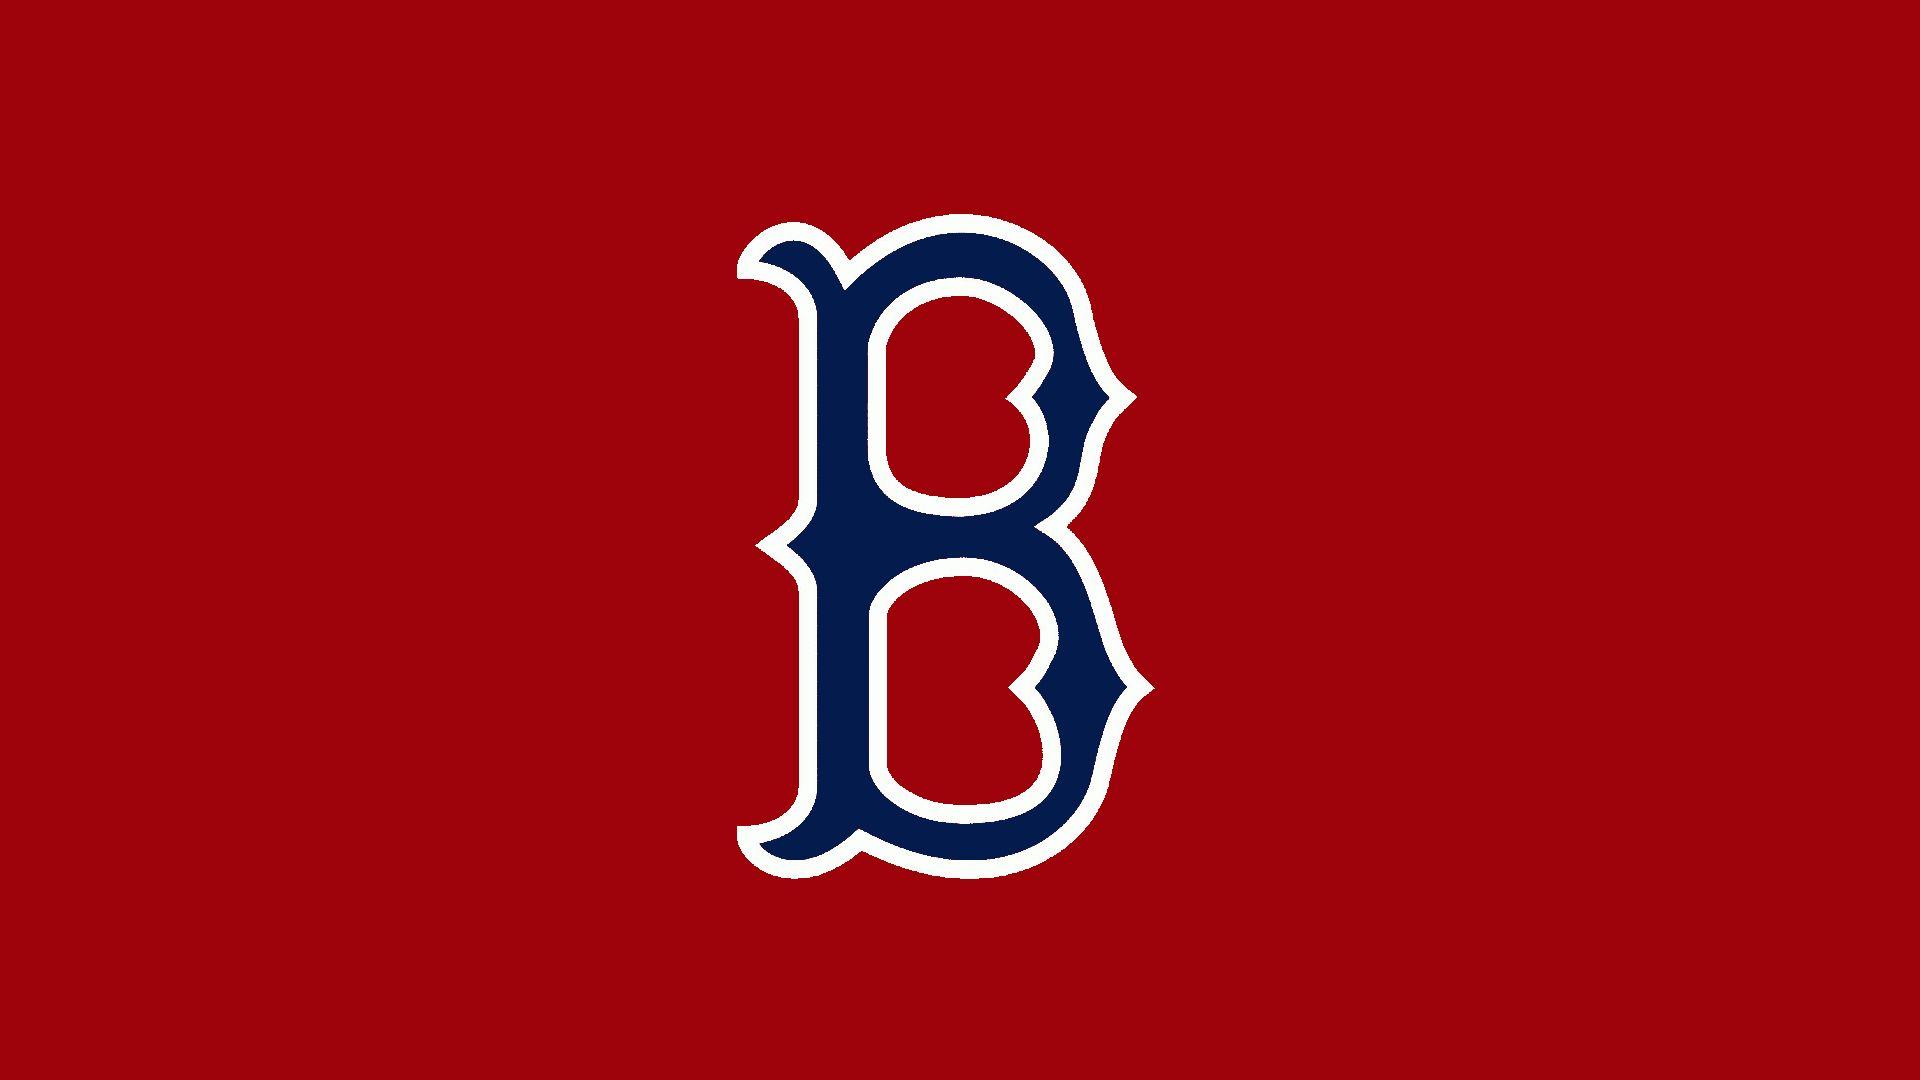 Red Sox Photo Wallpaper